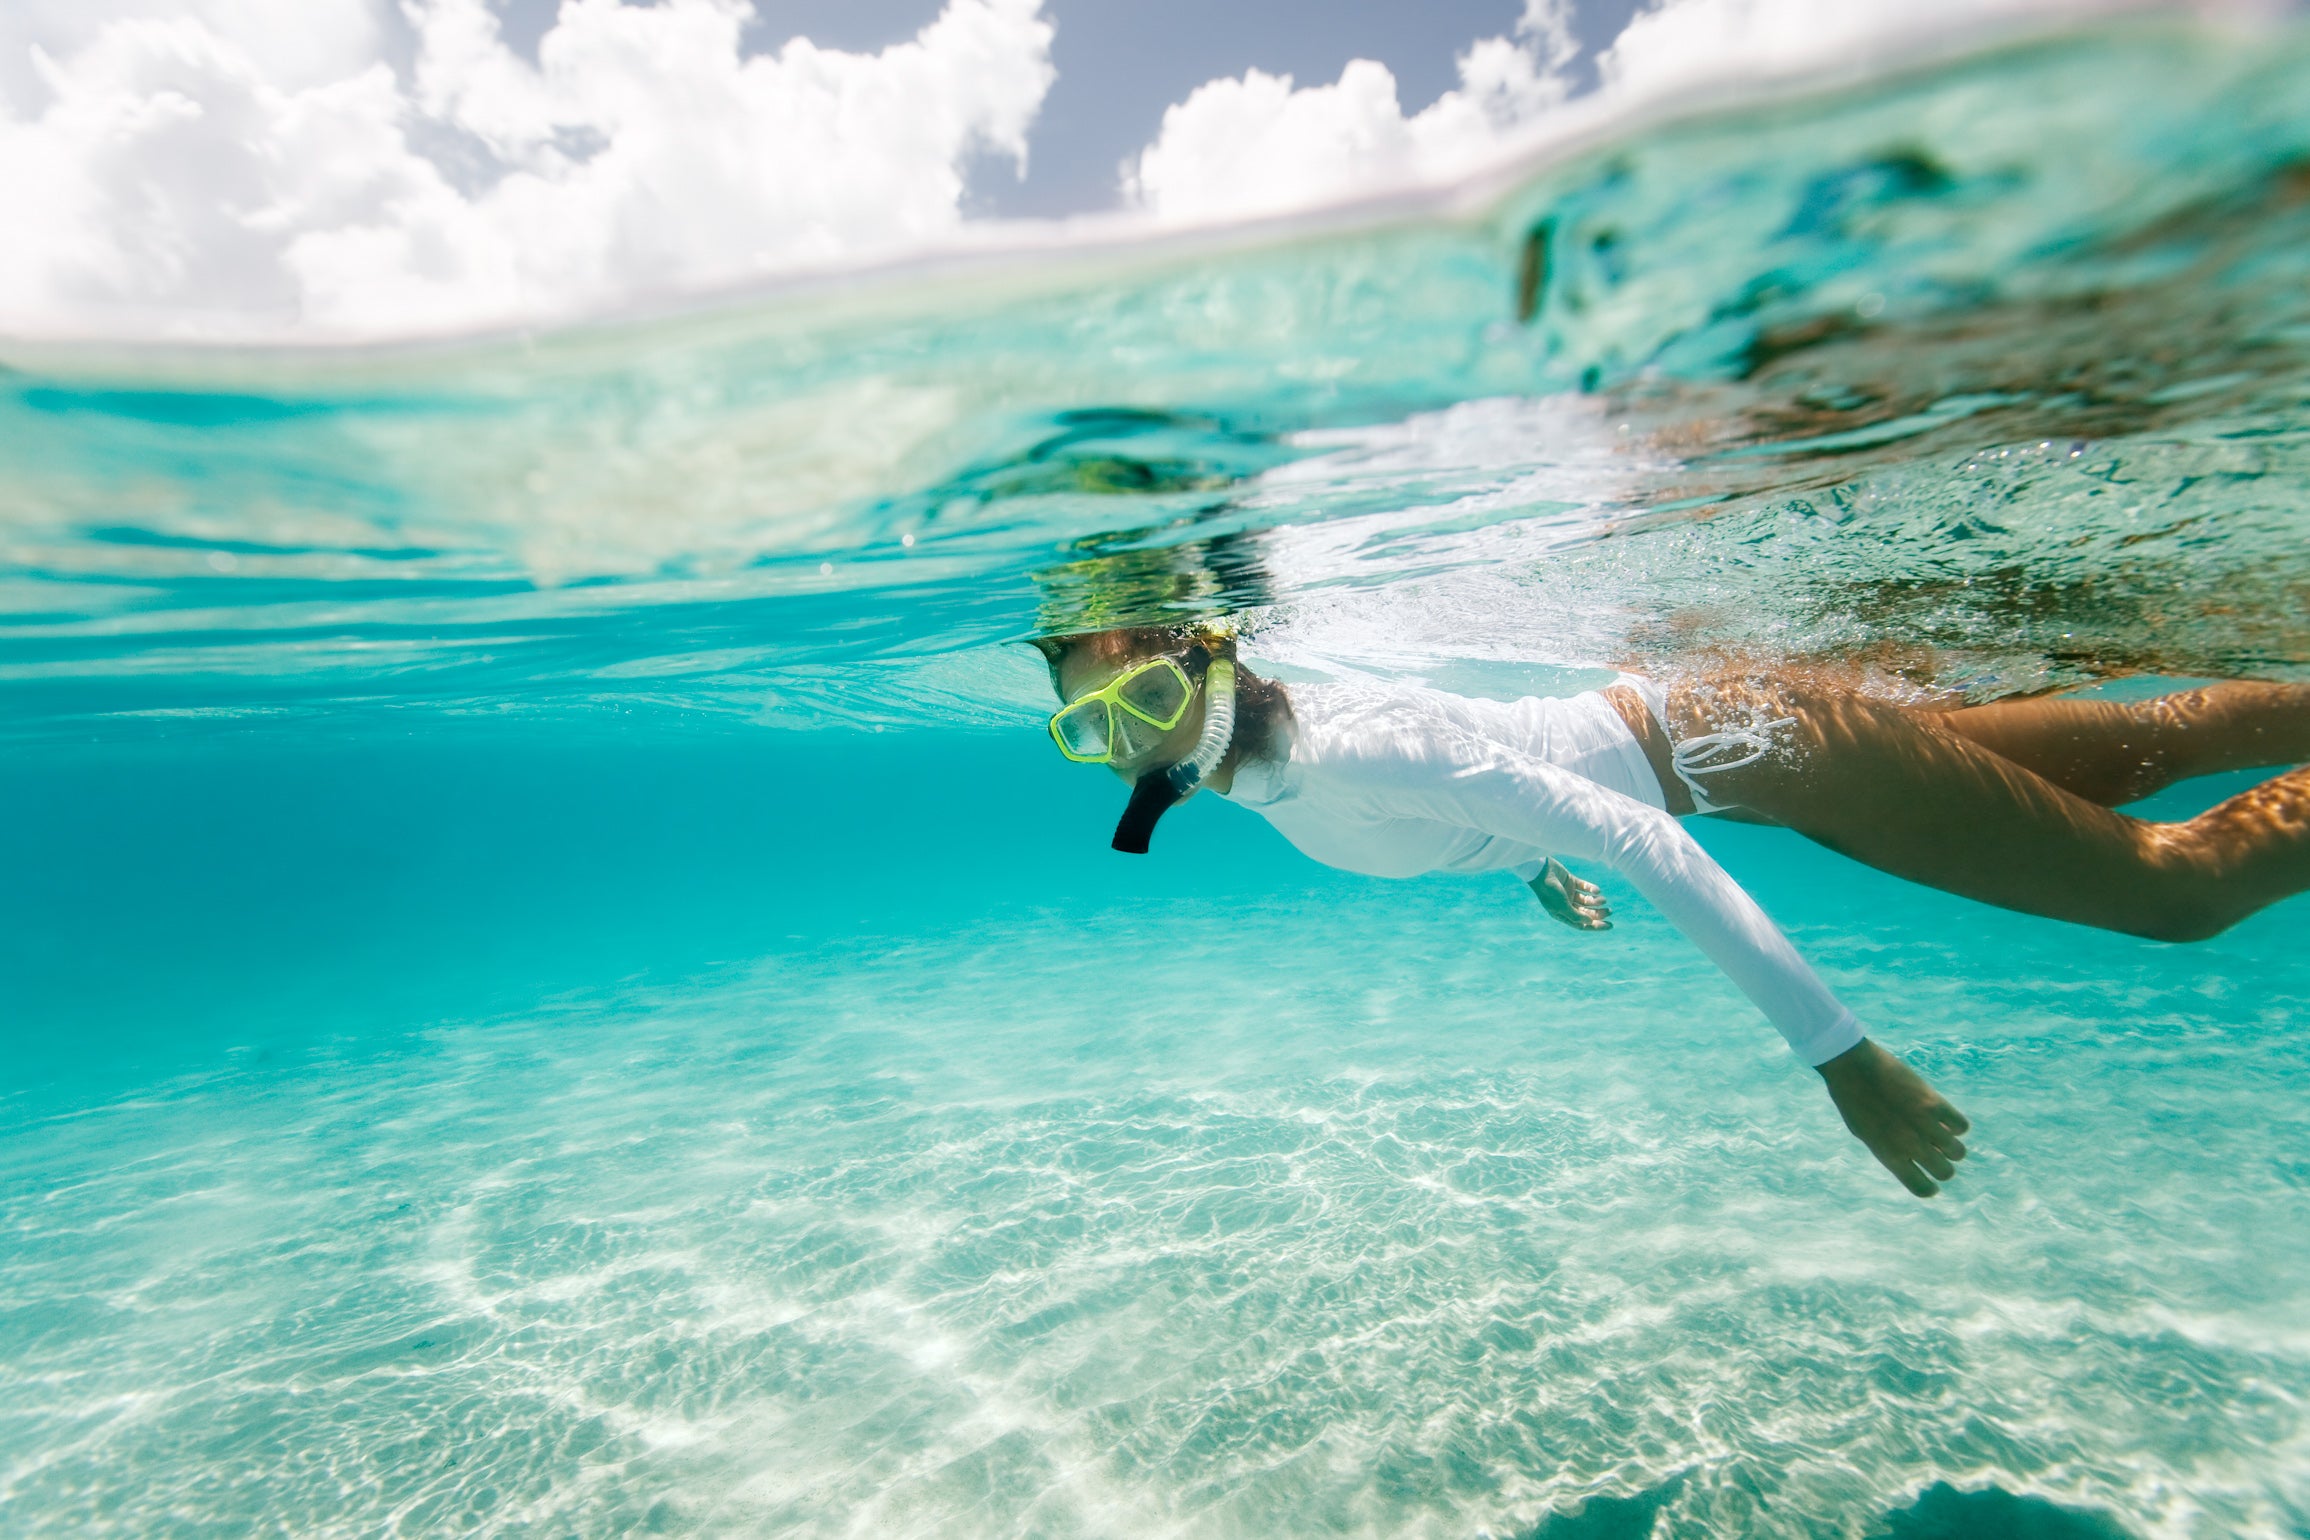 Take a snorkeling cruise